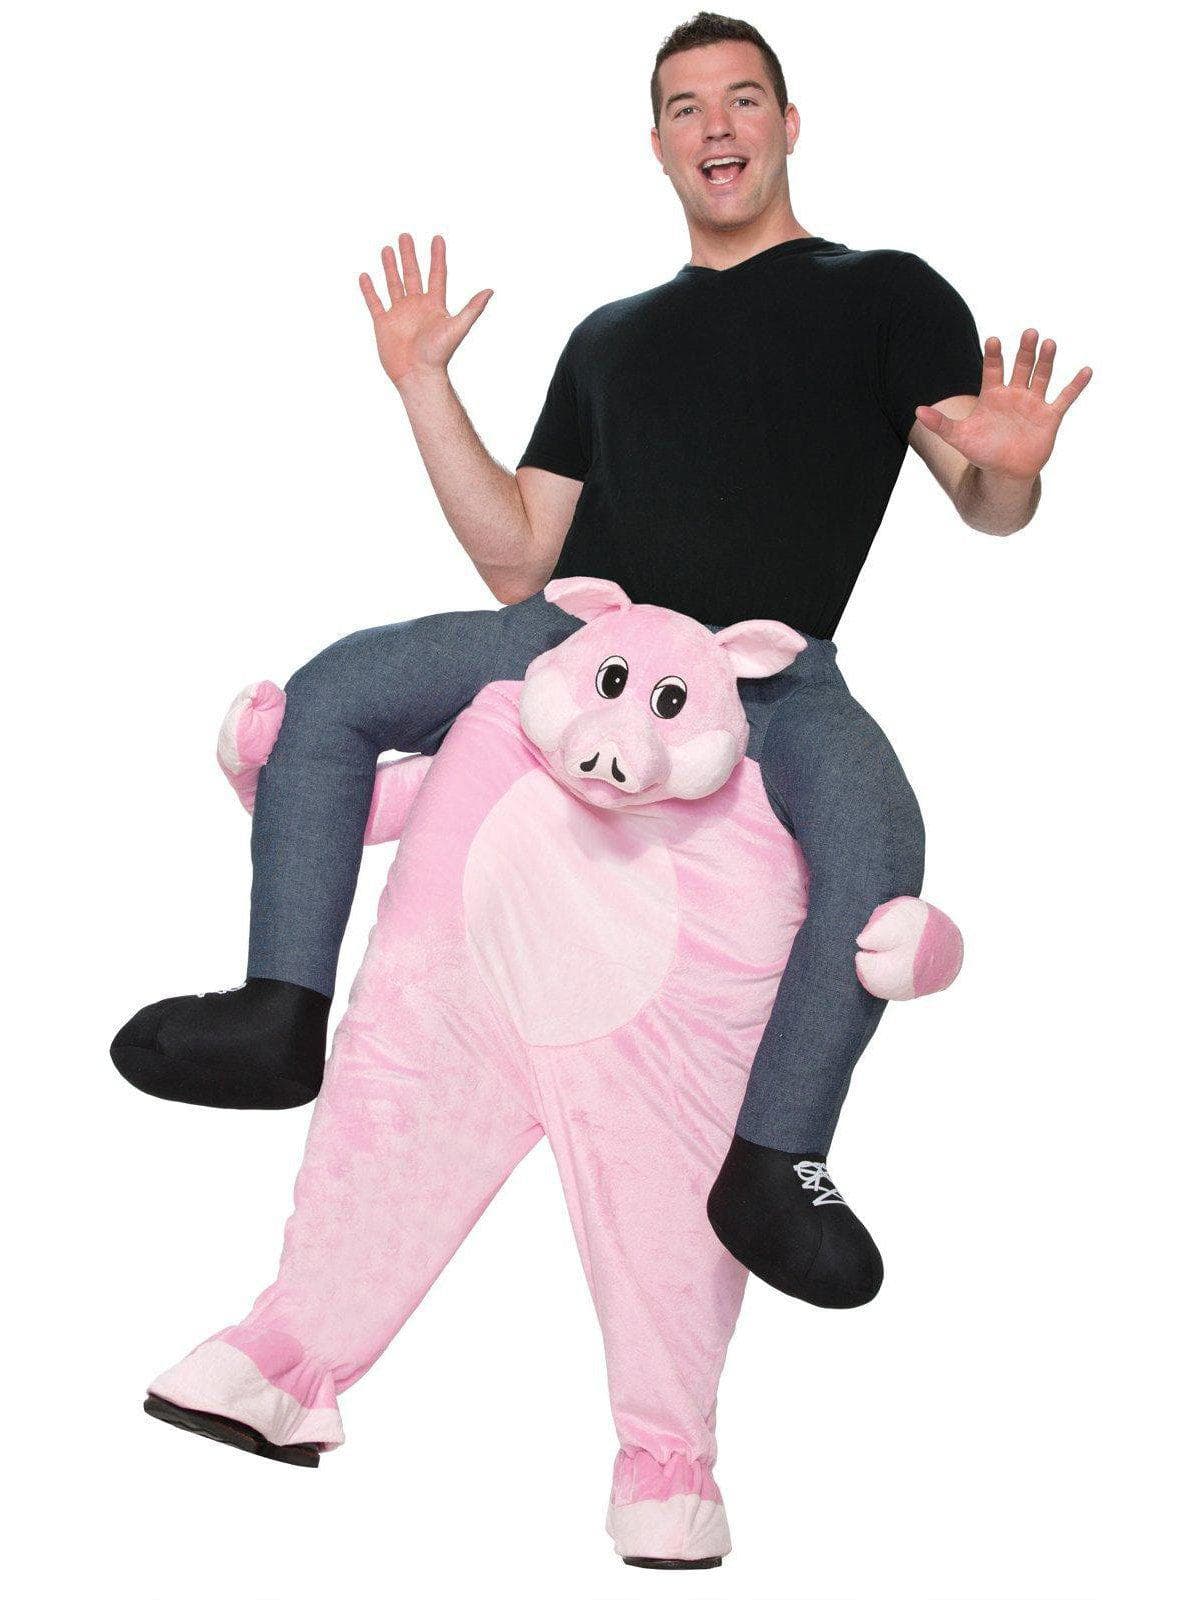 Adult Ride a Pig Costume - costumes.com